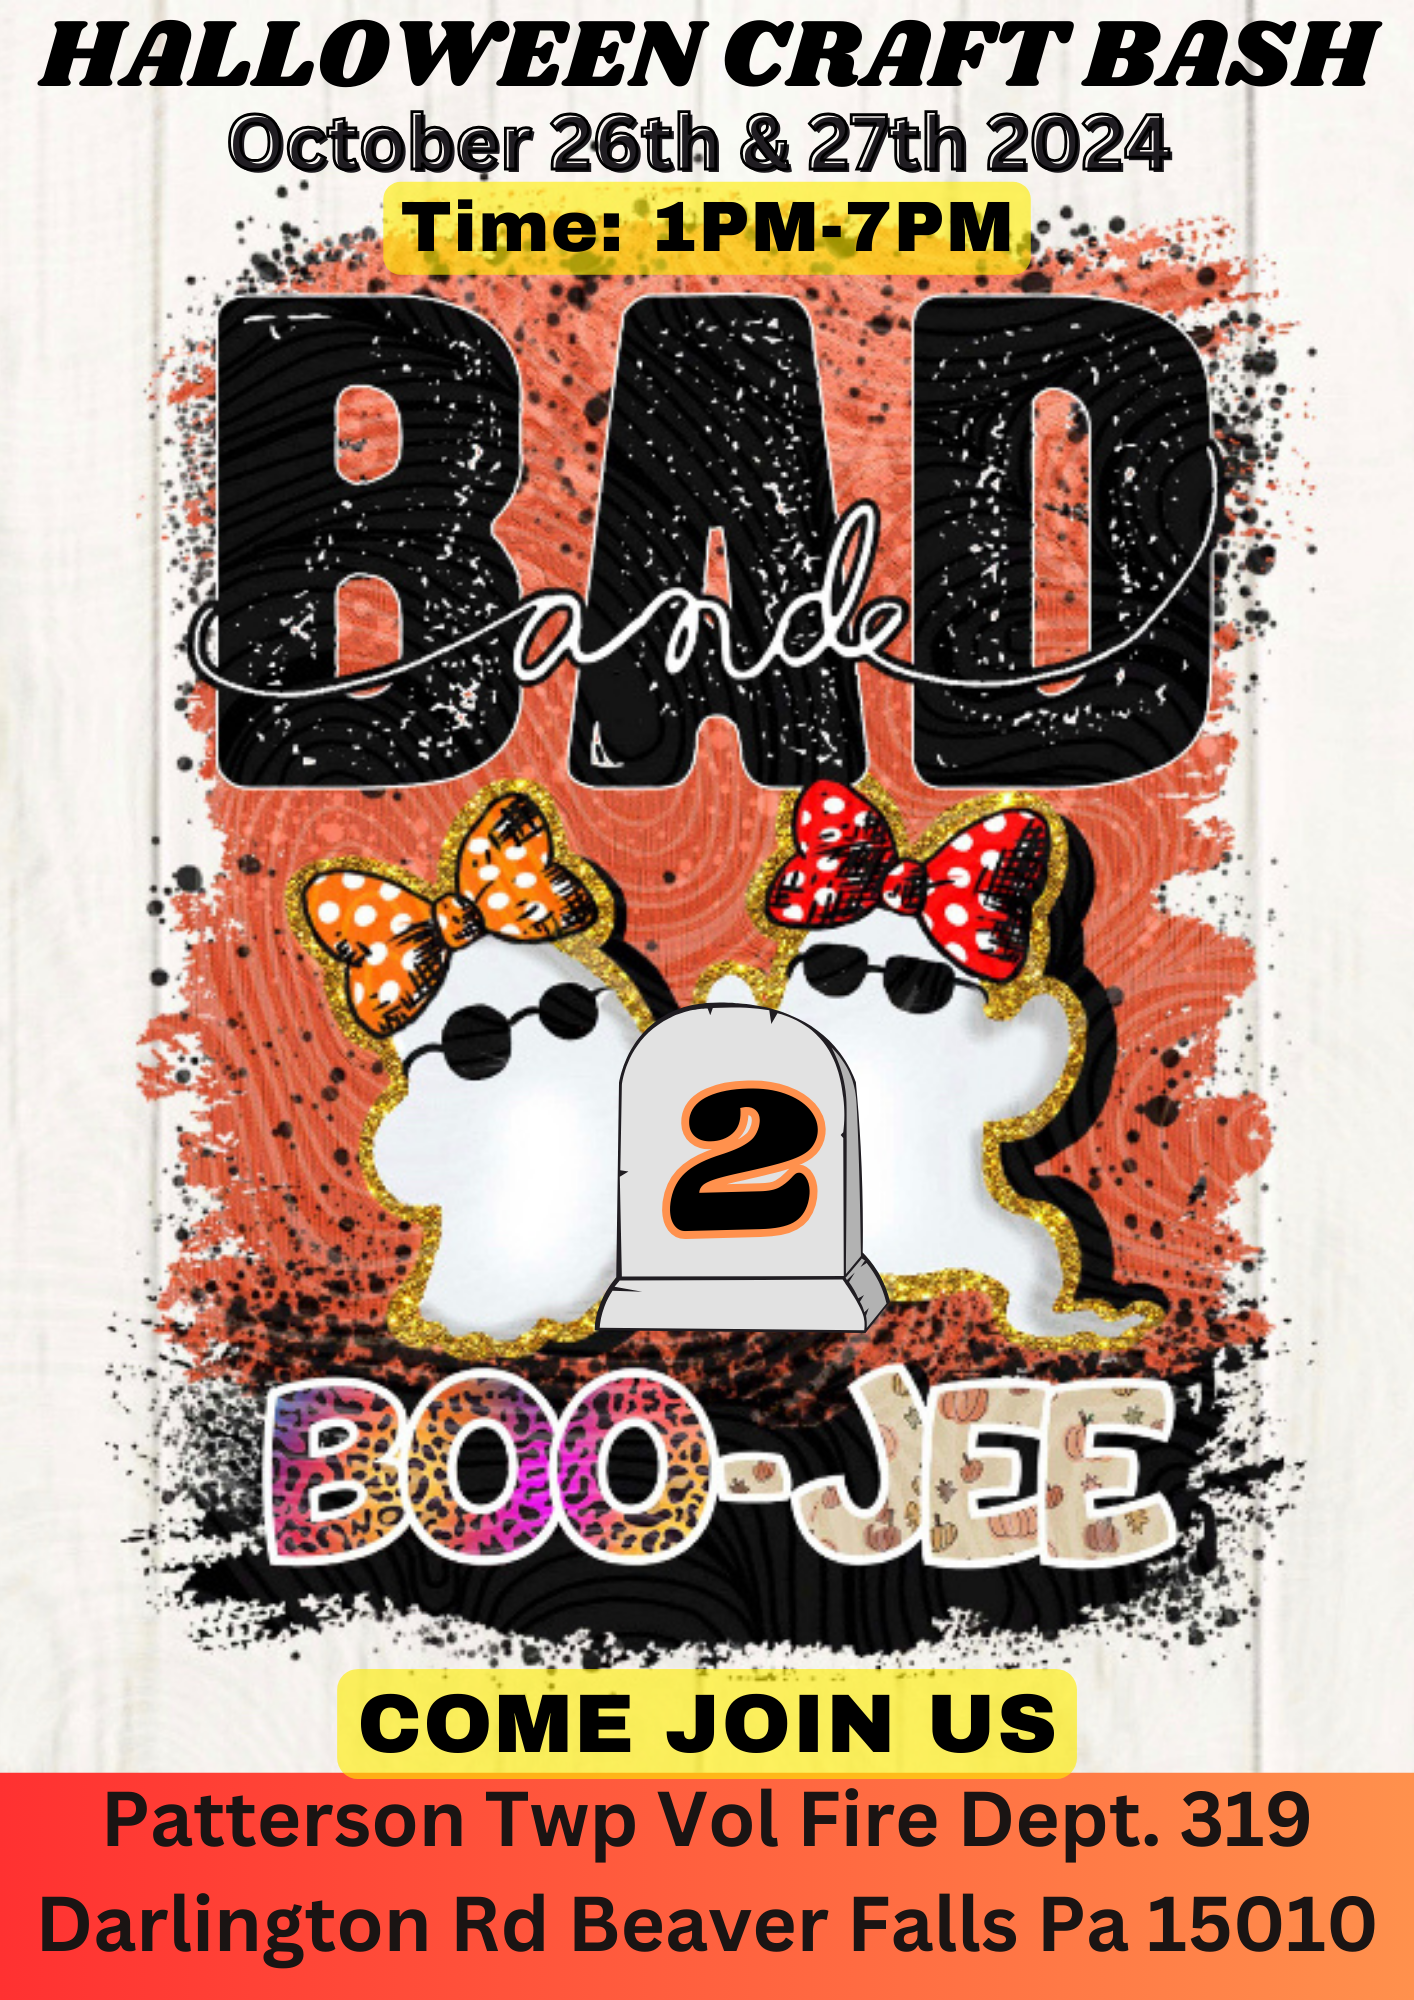 2nd Annual Bad and Boo-Jee Halloween Craft Bash